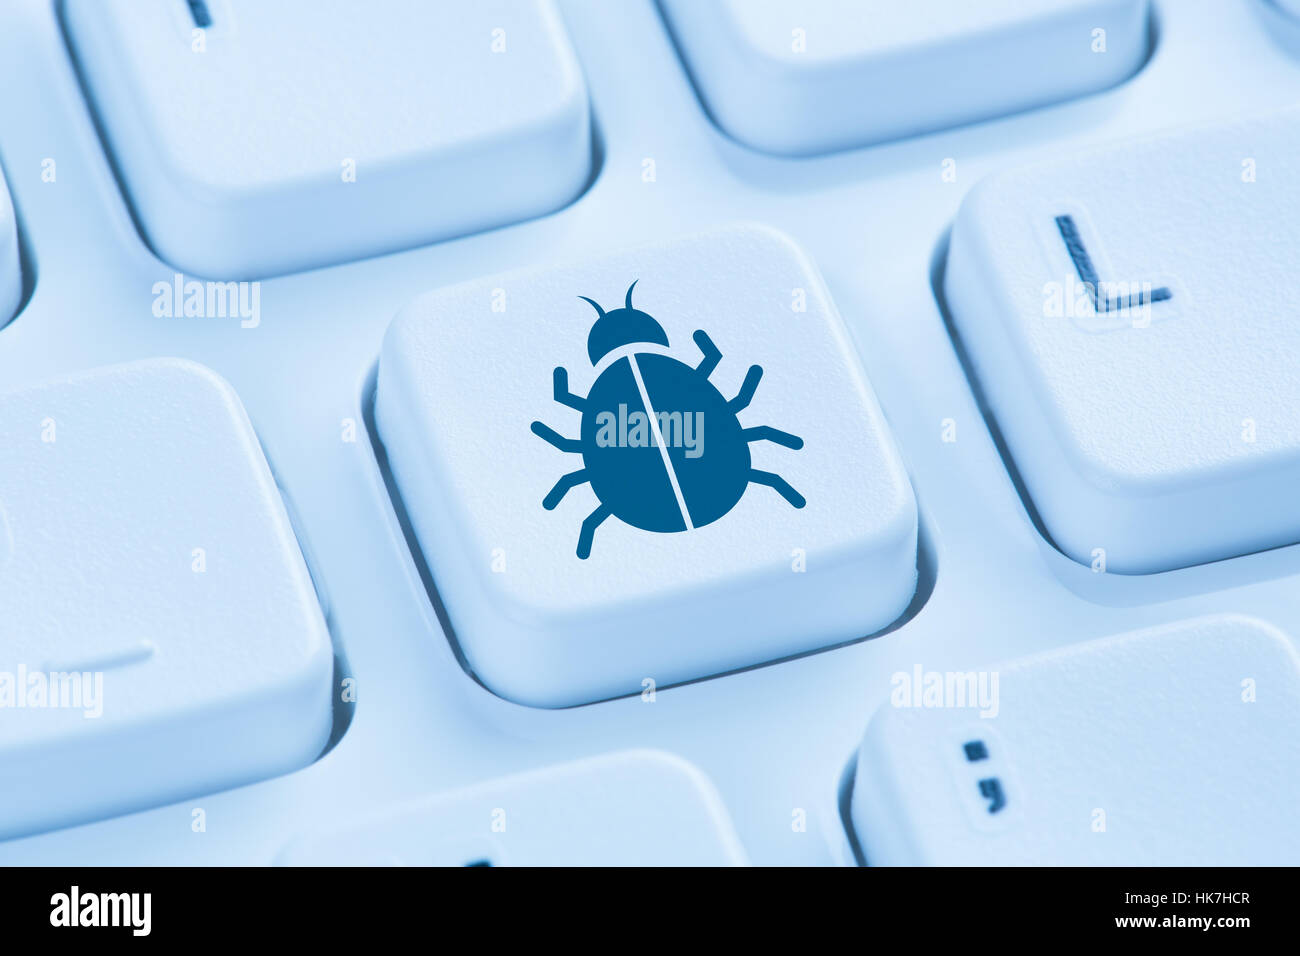 Computer virus Trojan network security symbol blue internet keyboard Stock Photo